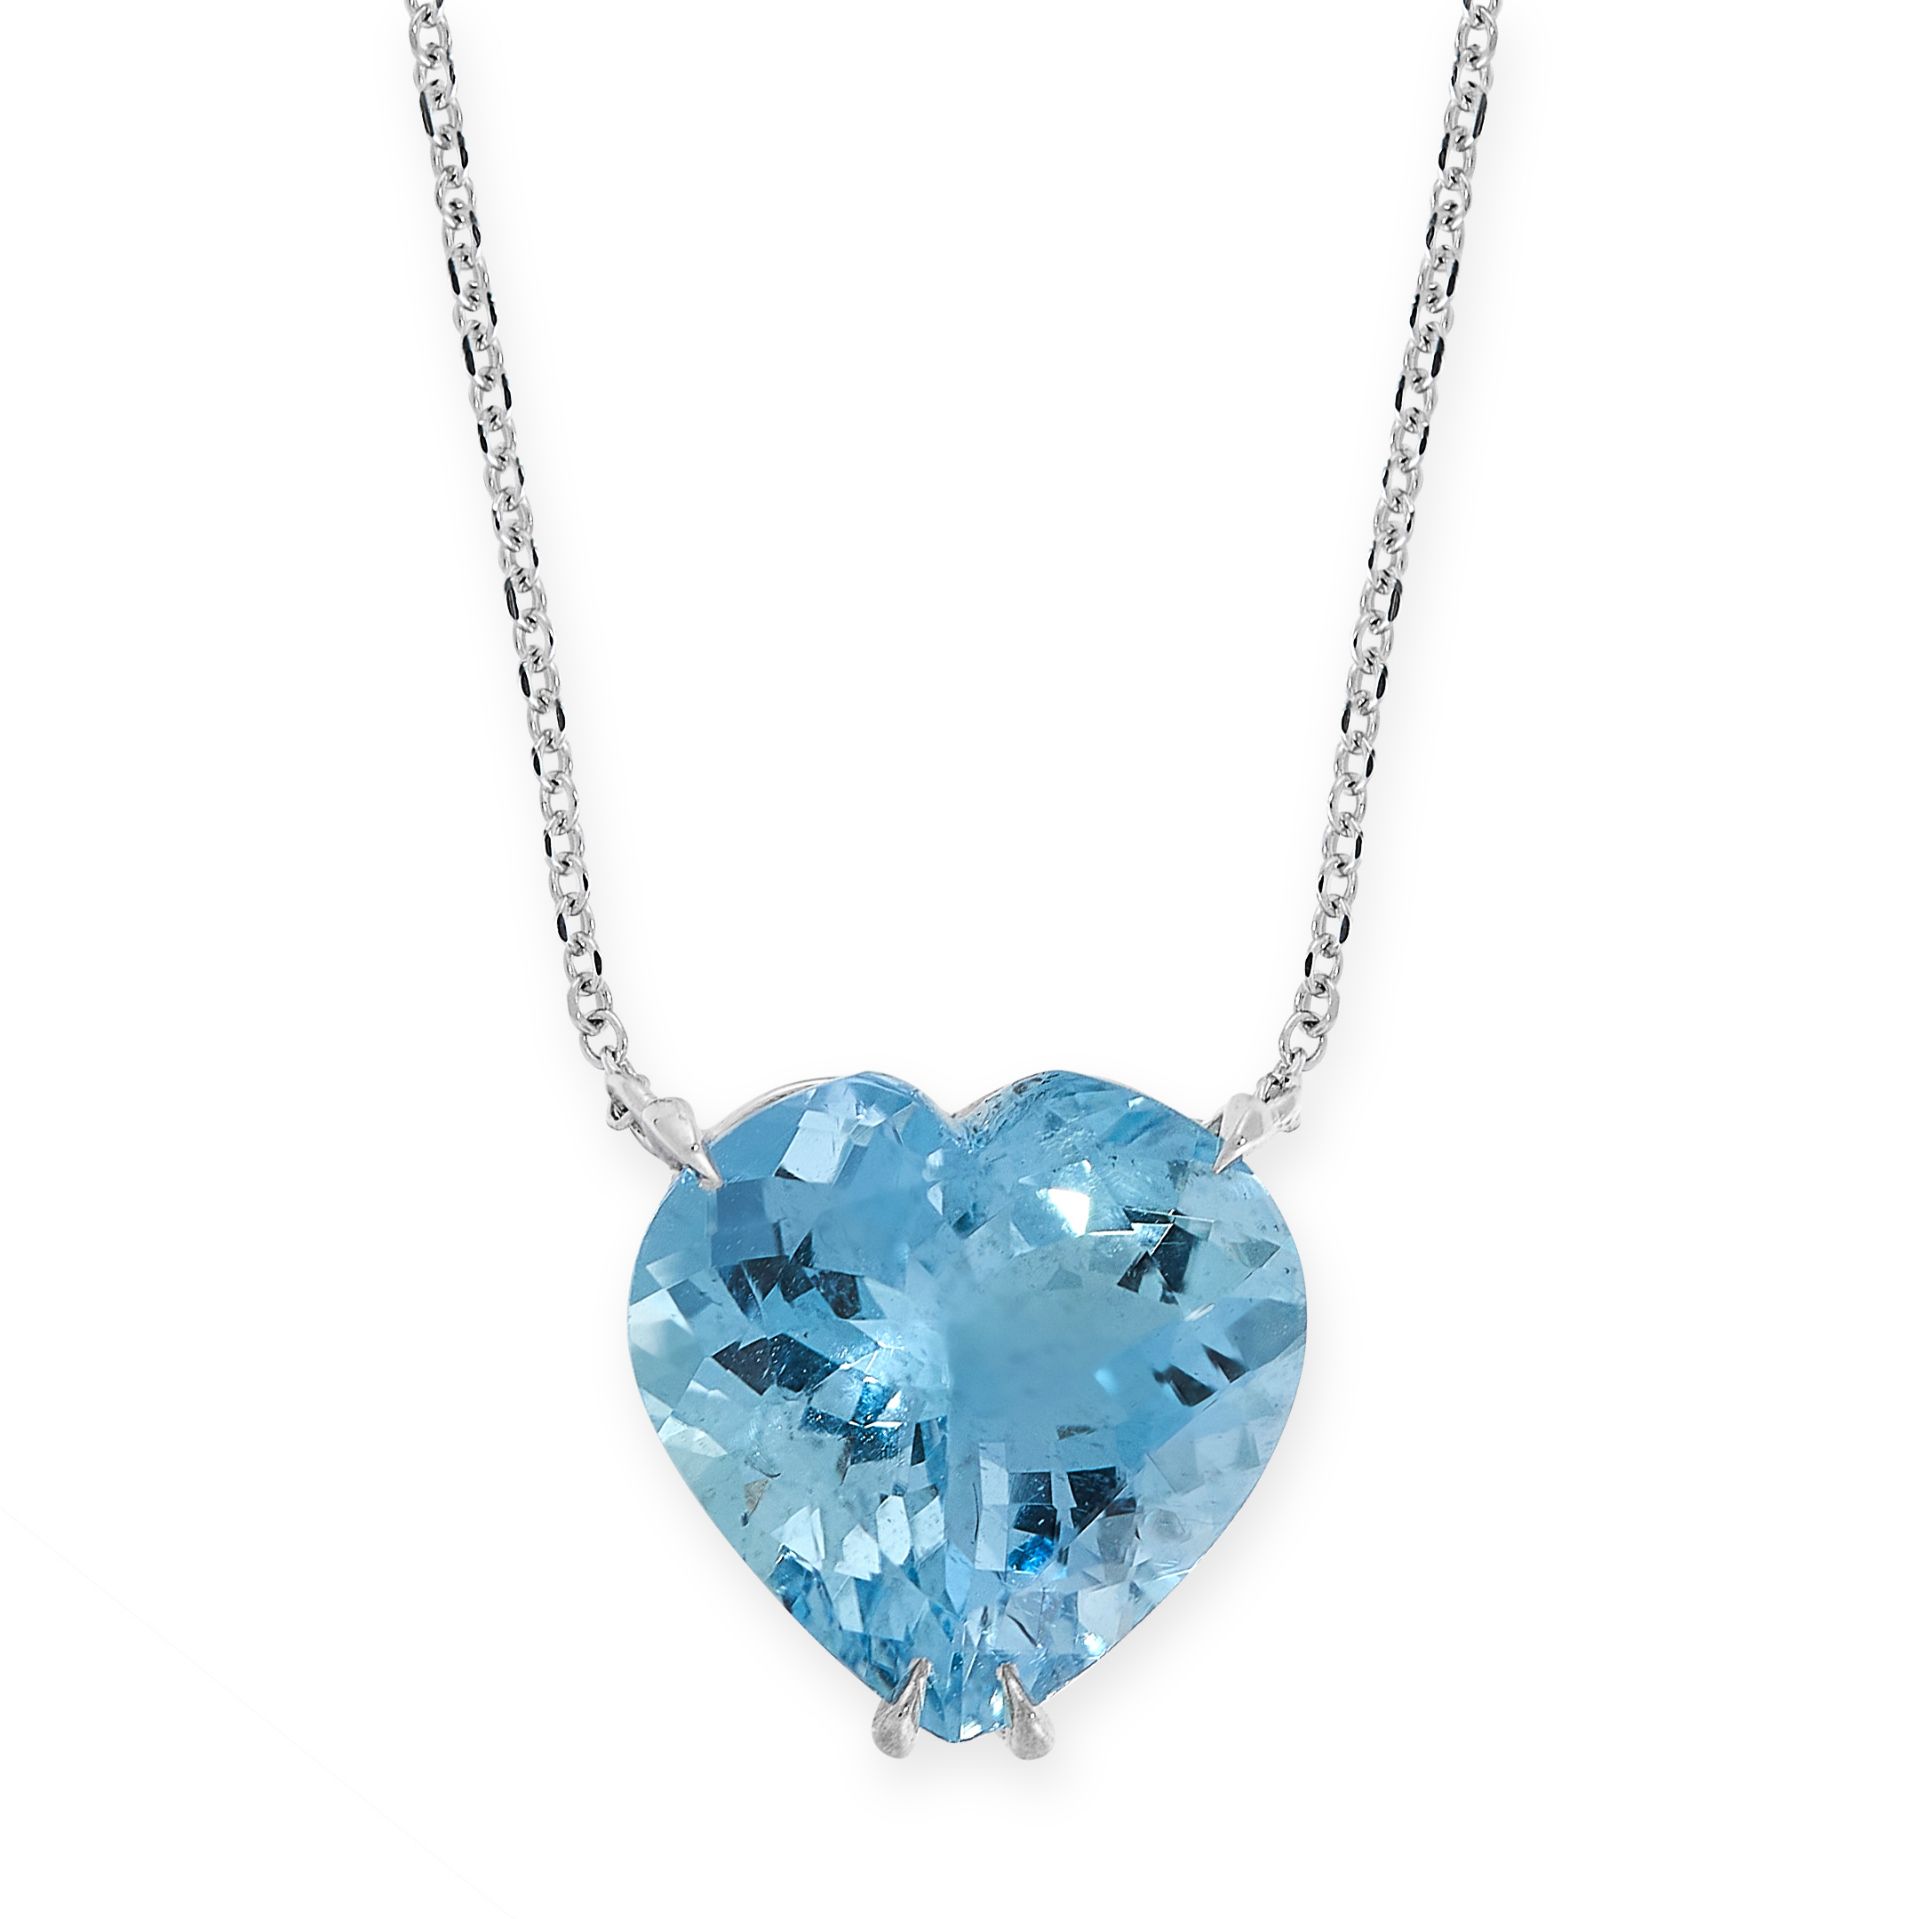 AN AQUAMARINE PENDANT NECKLACE the pendant set with a heart cut aquamarine of 3.80 carats on fine